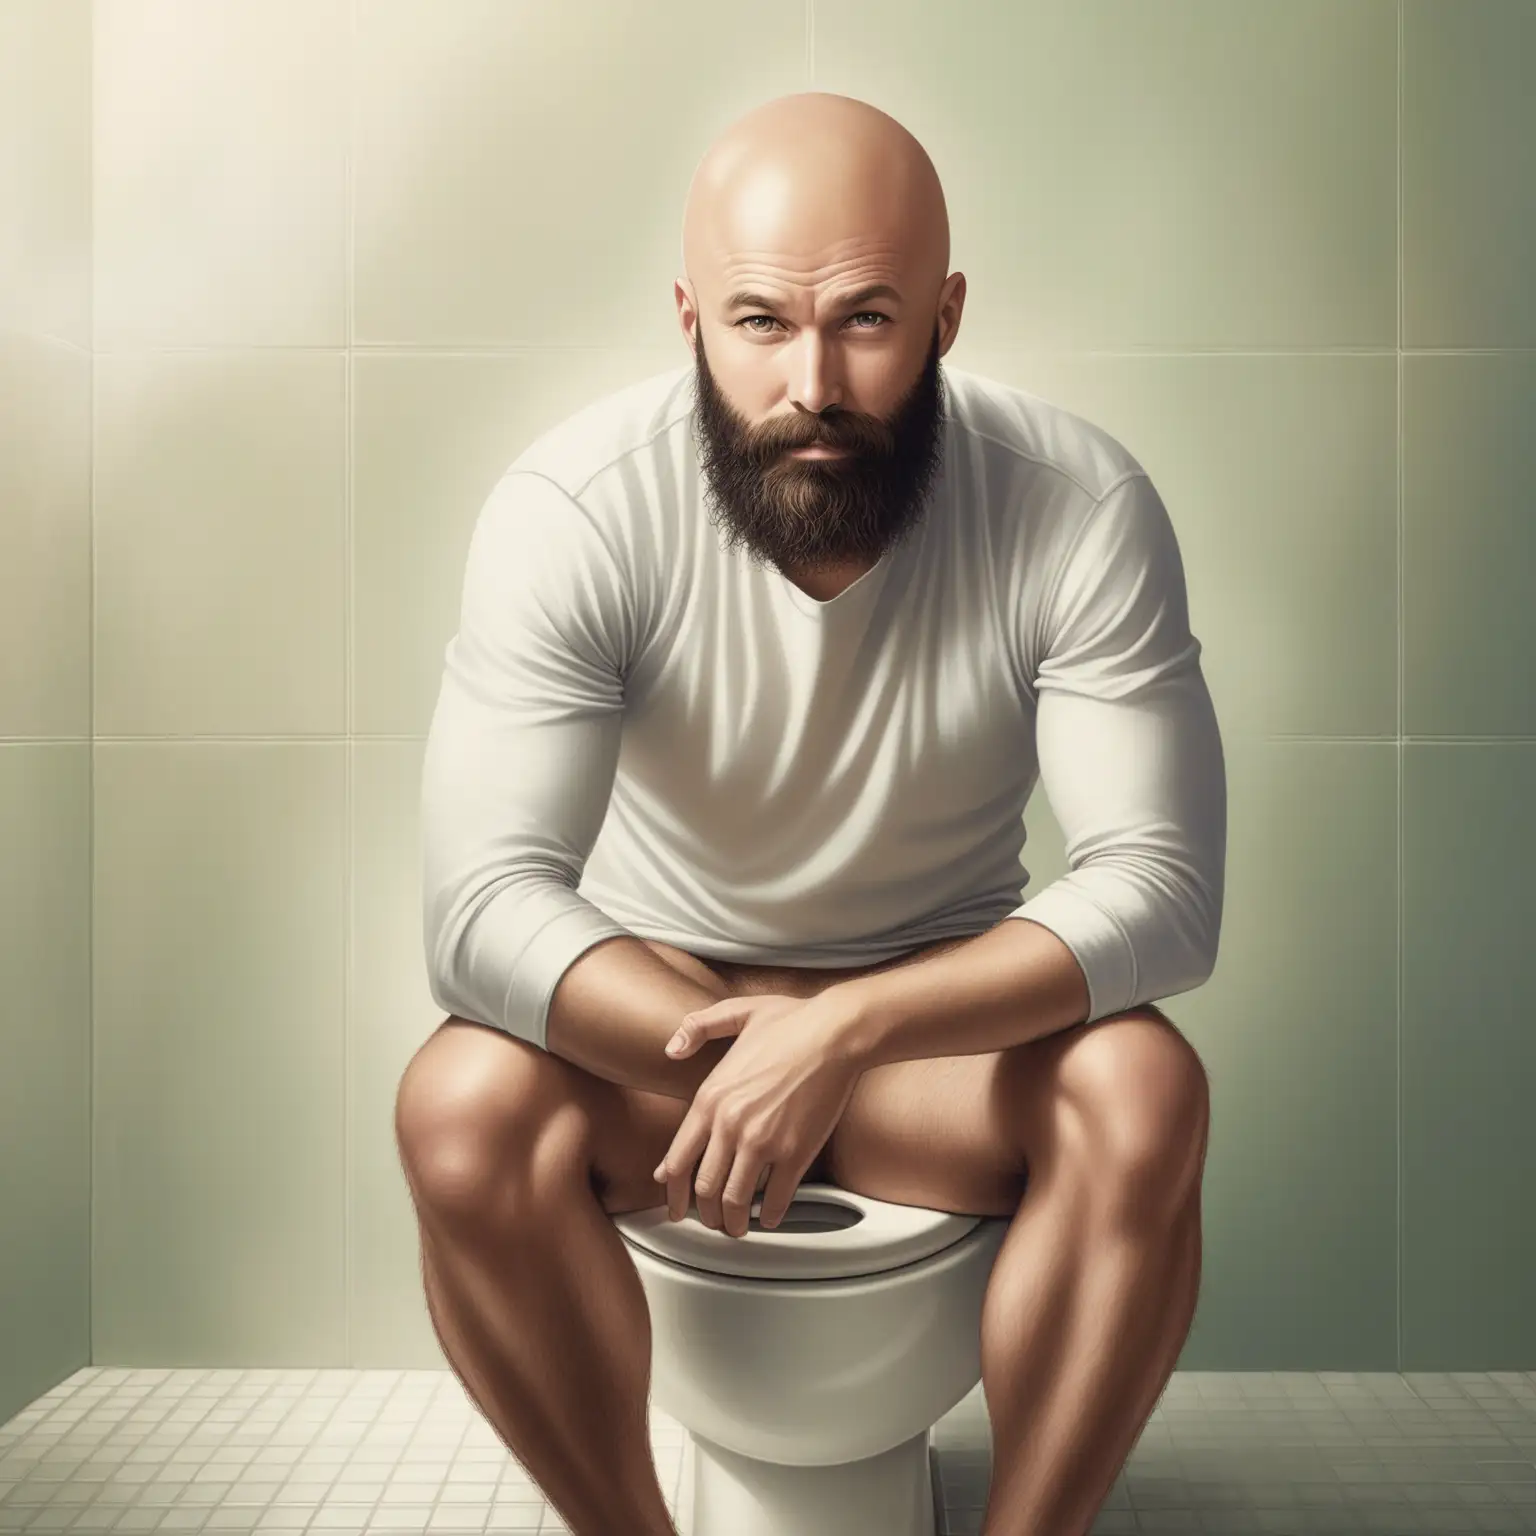 Bearded Bald Man Relaxing on Toilet with Album Art Theme